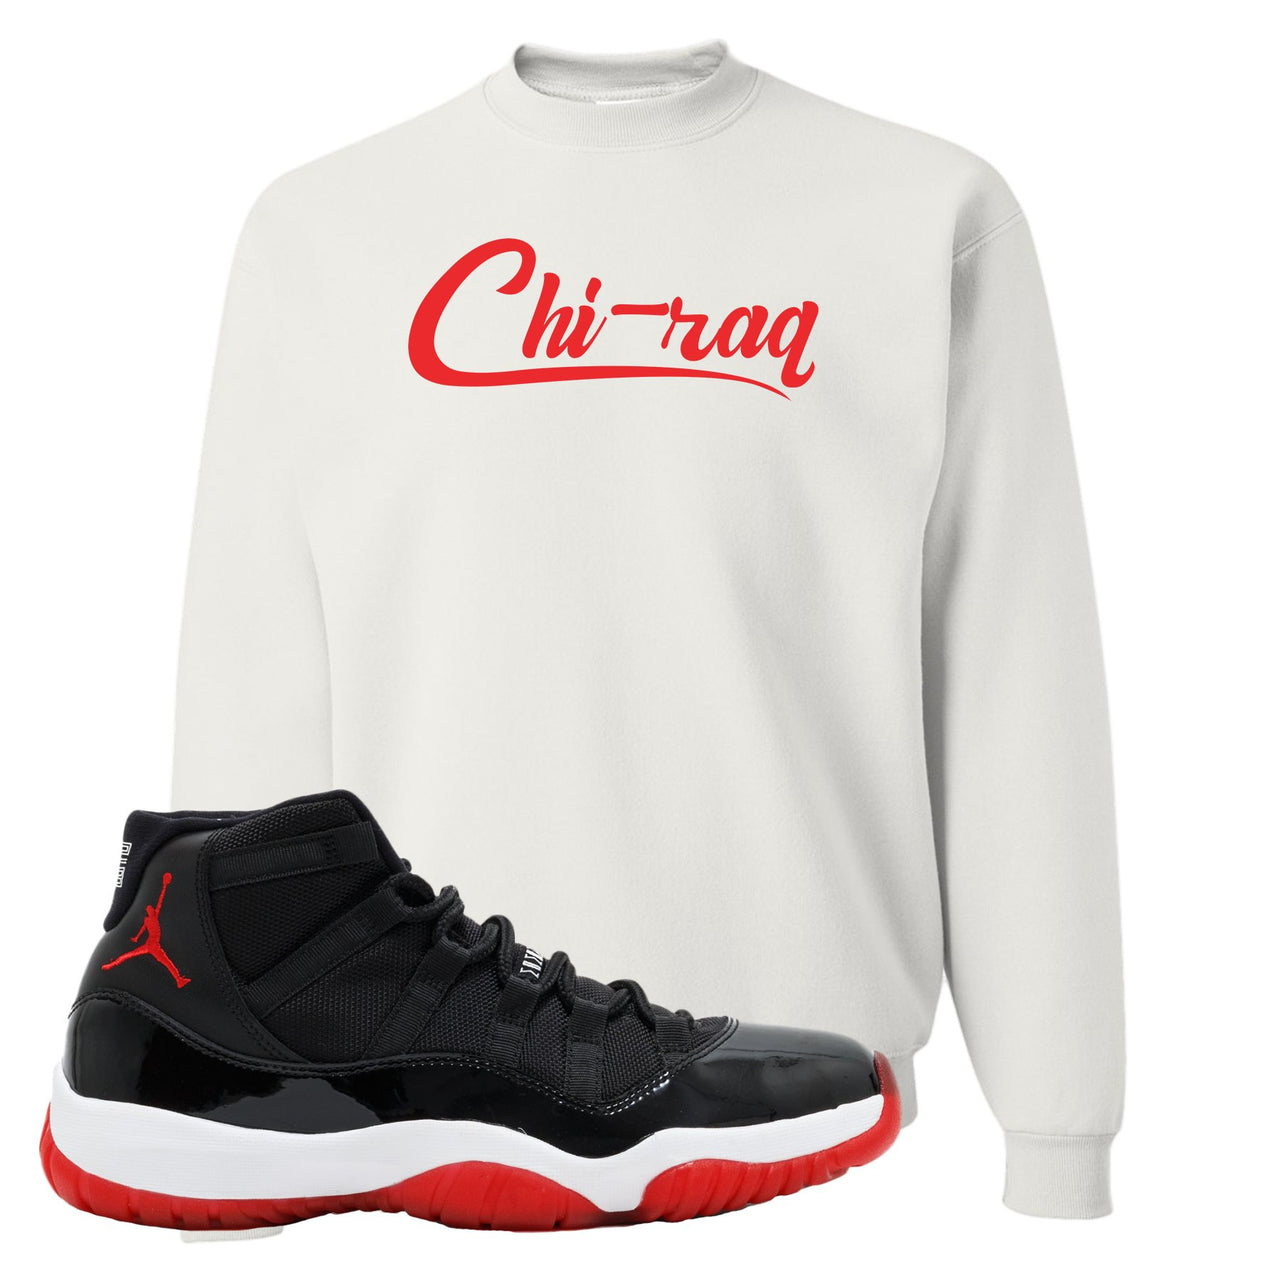 Jordan 11 Bred Chi-raq White Sneaker Hook Up Crewneck Sweatshirt